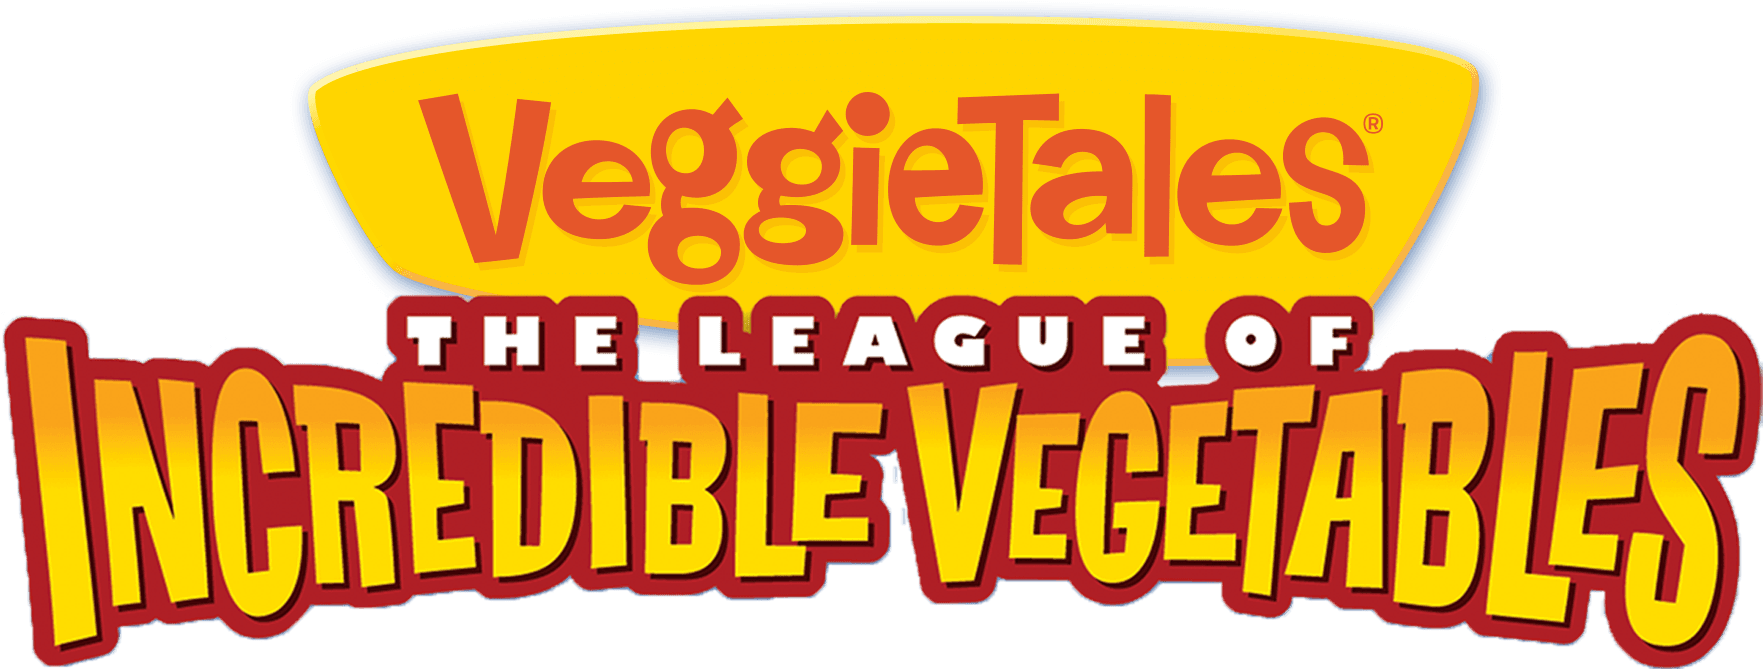 VeggieTales: The League of Incredible Vegetables logo